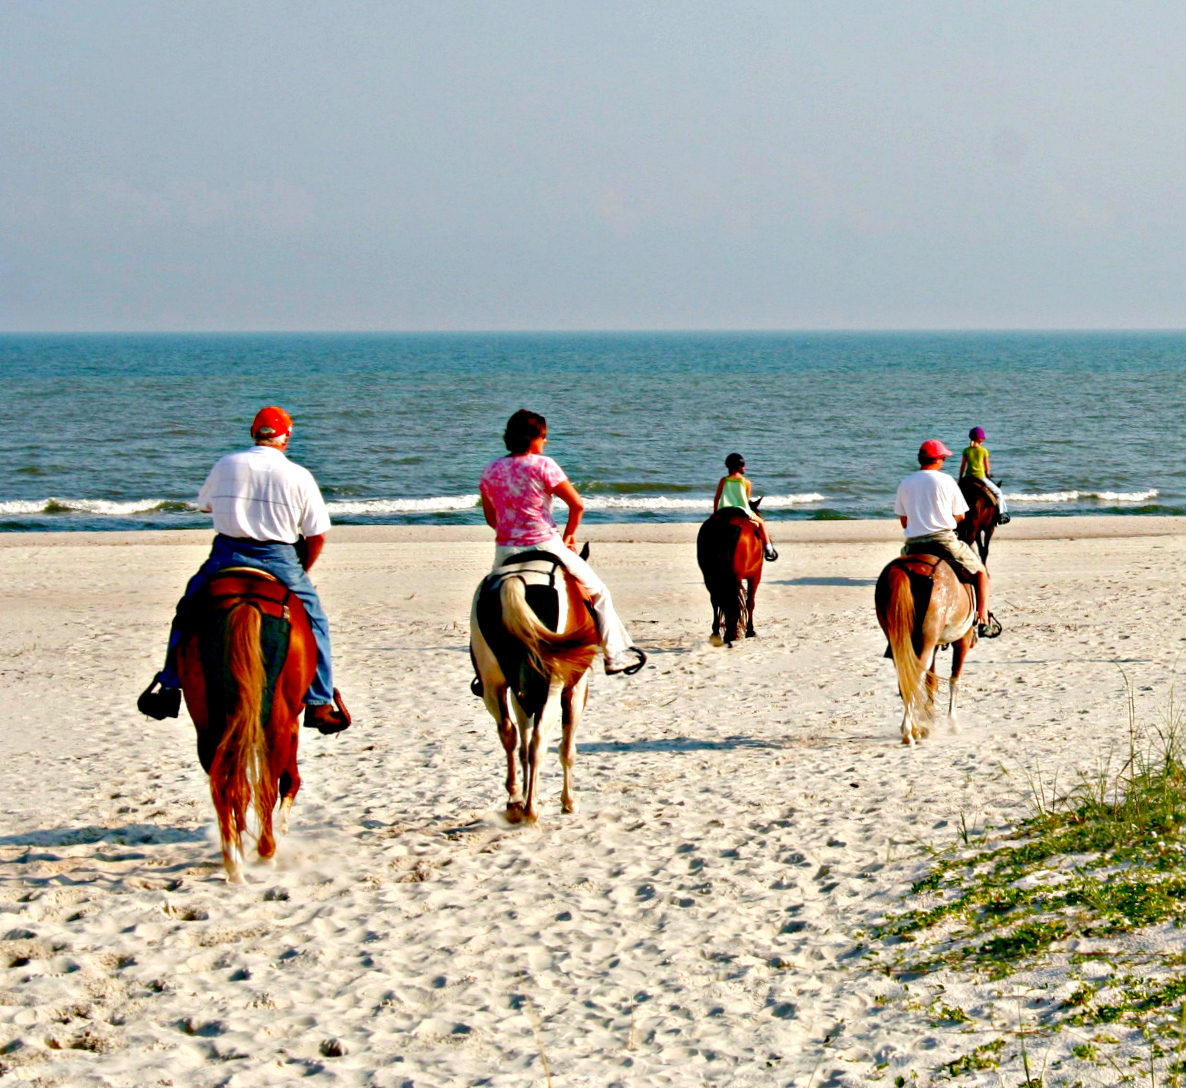 Family horseback riding on the beach in Cape San Blas, Florida